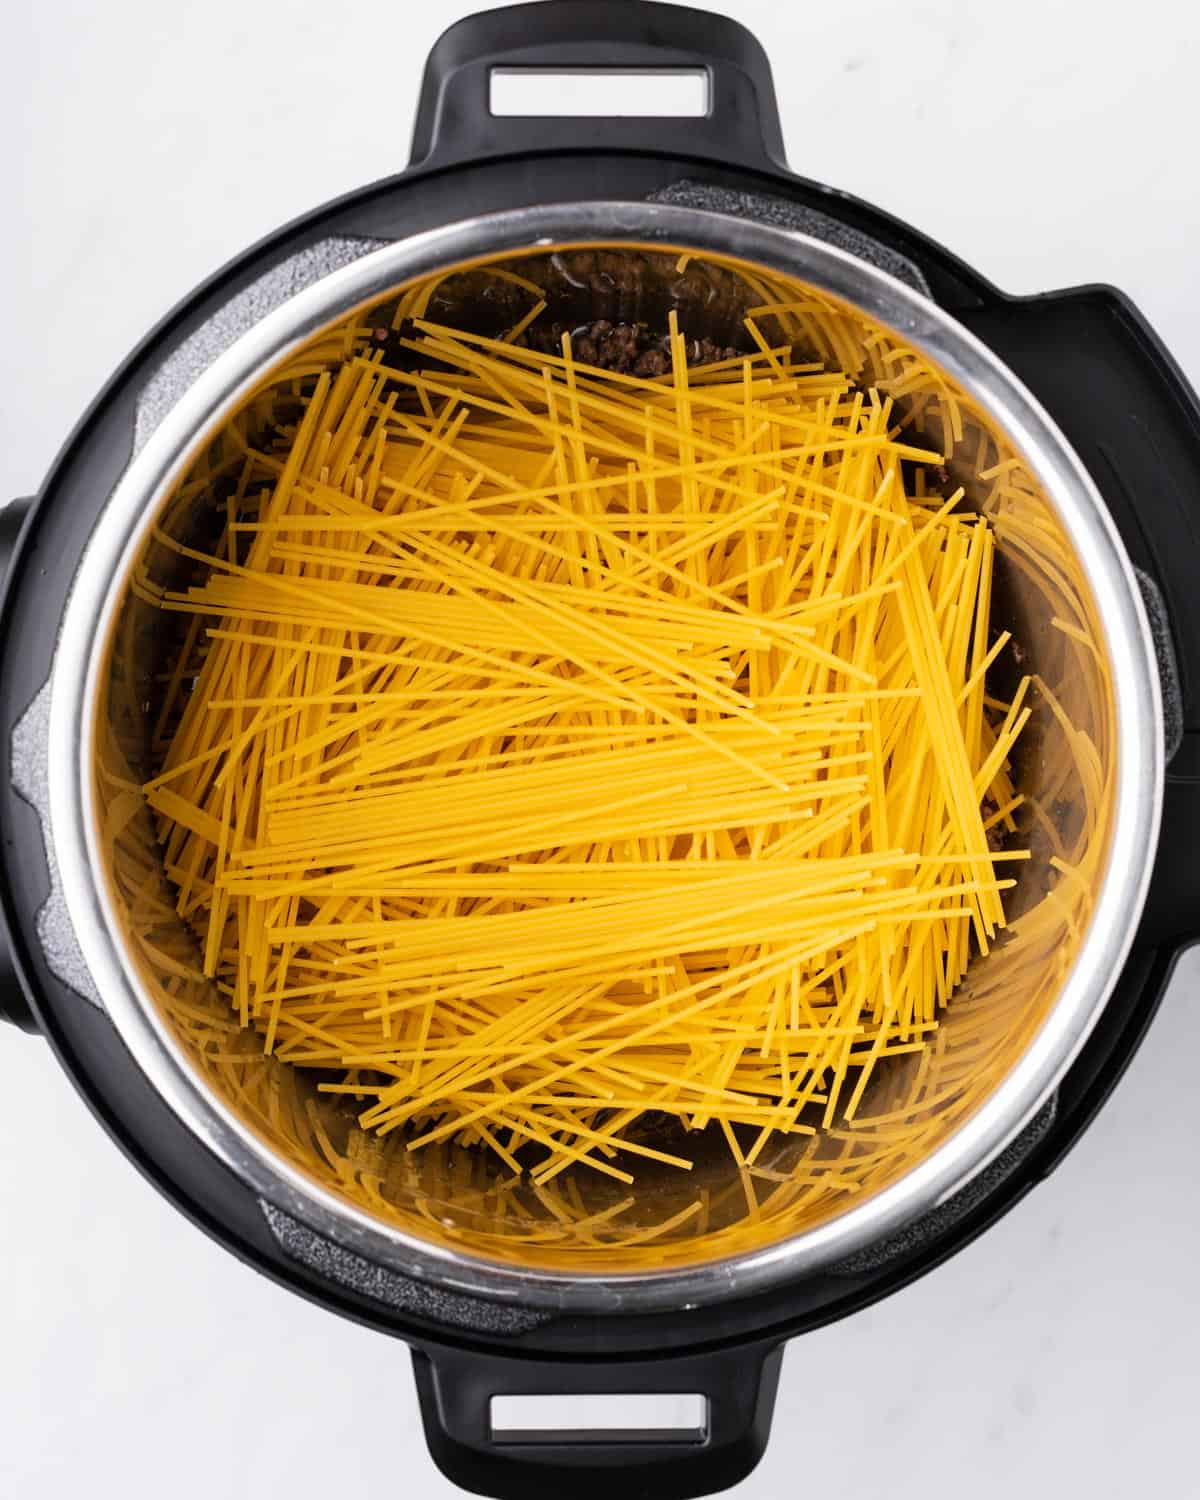 uncooked spaghetti pasta layered in criss cross pattern.